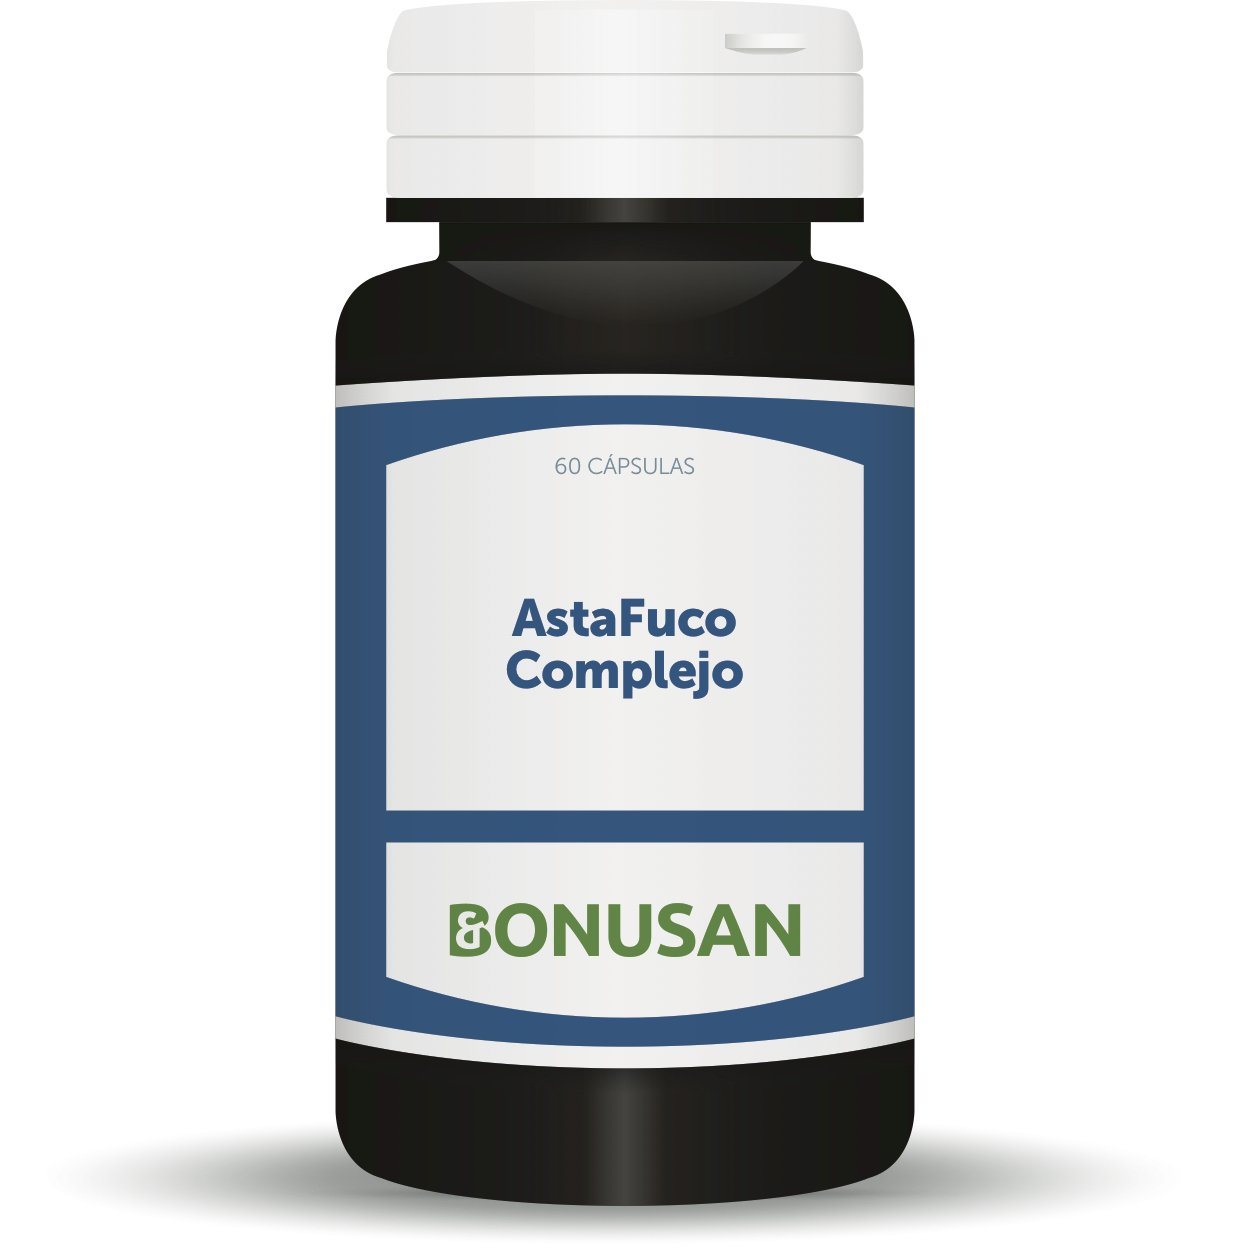 AstaFuco Complejo 60 Capsulas | Bonusan - Dietetica Ferrer